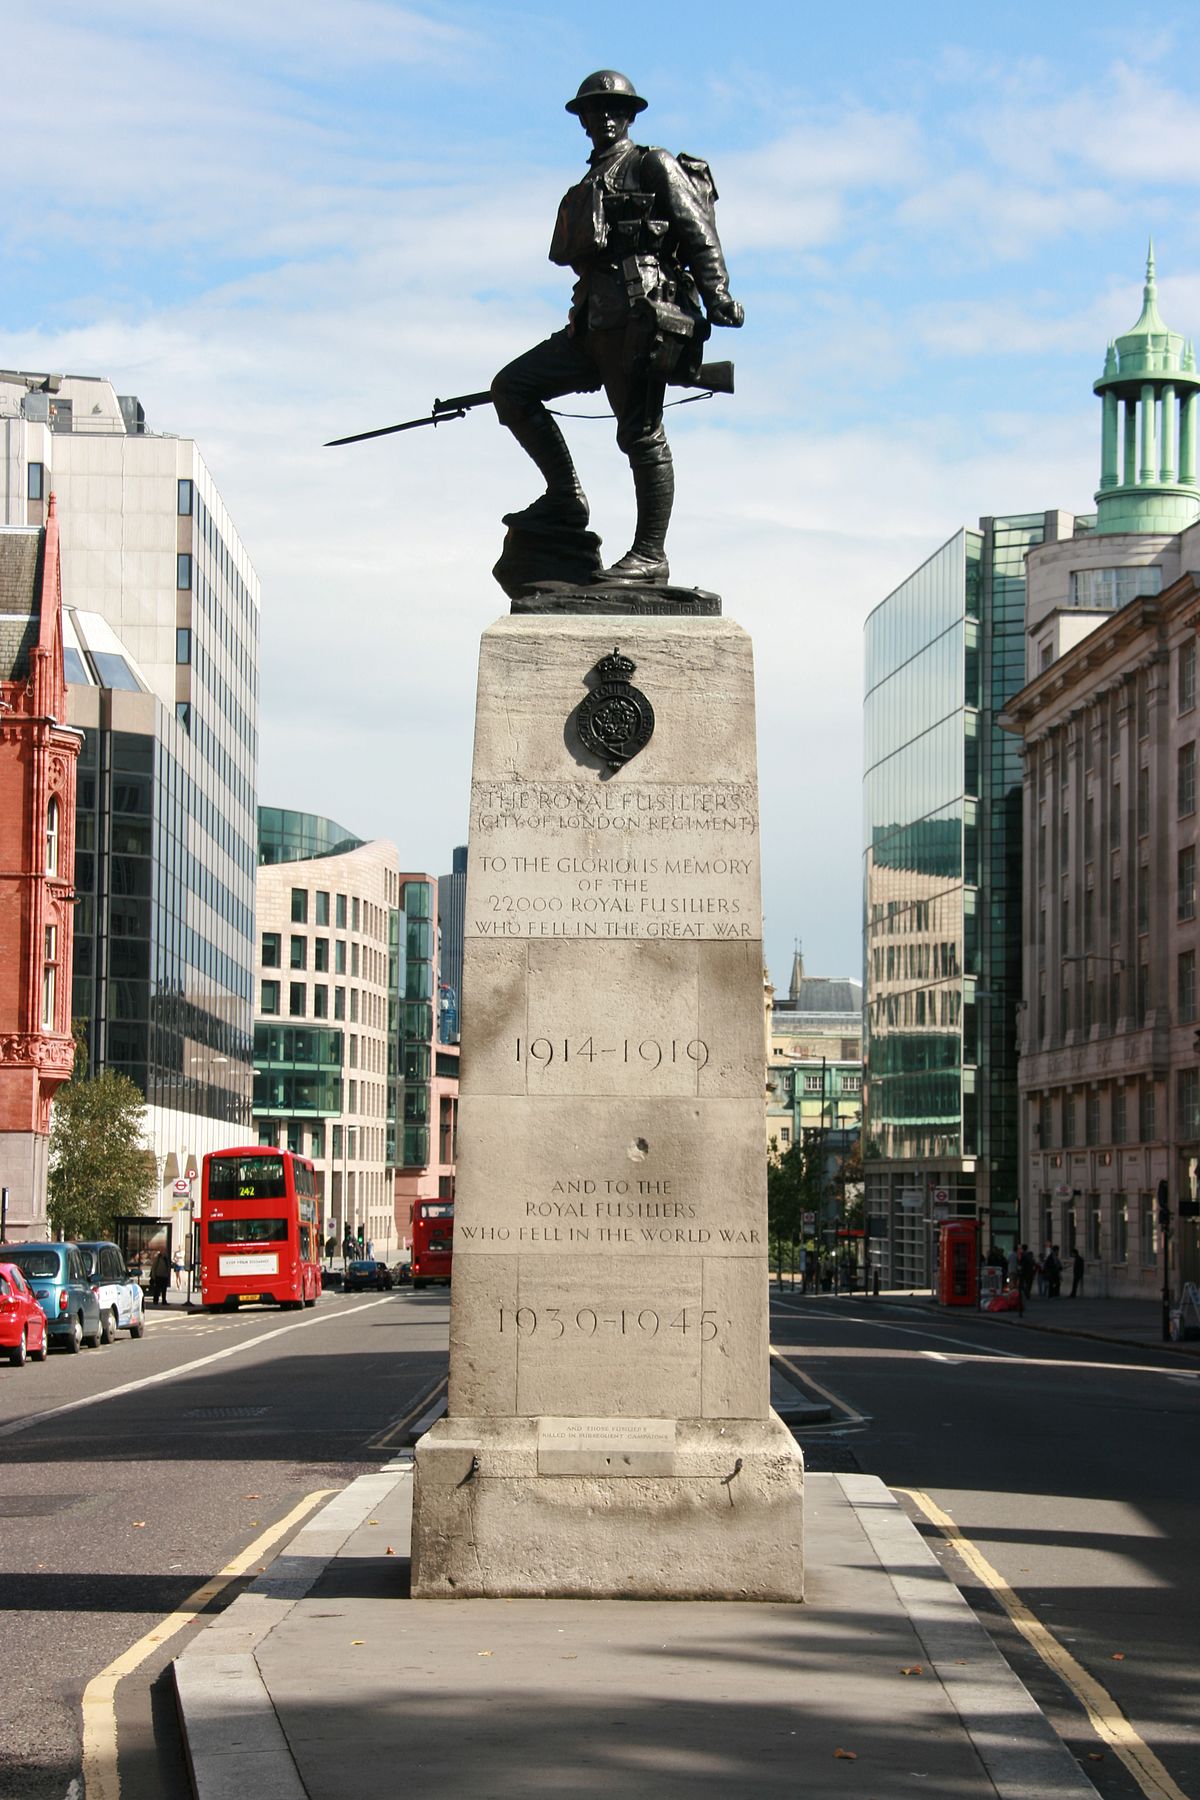 Royal Fusiliers War Memorial - Wikipedia